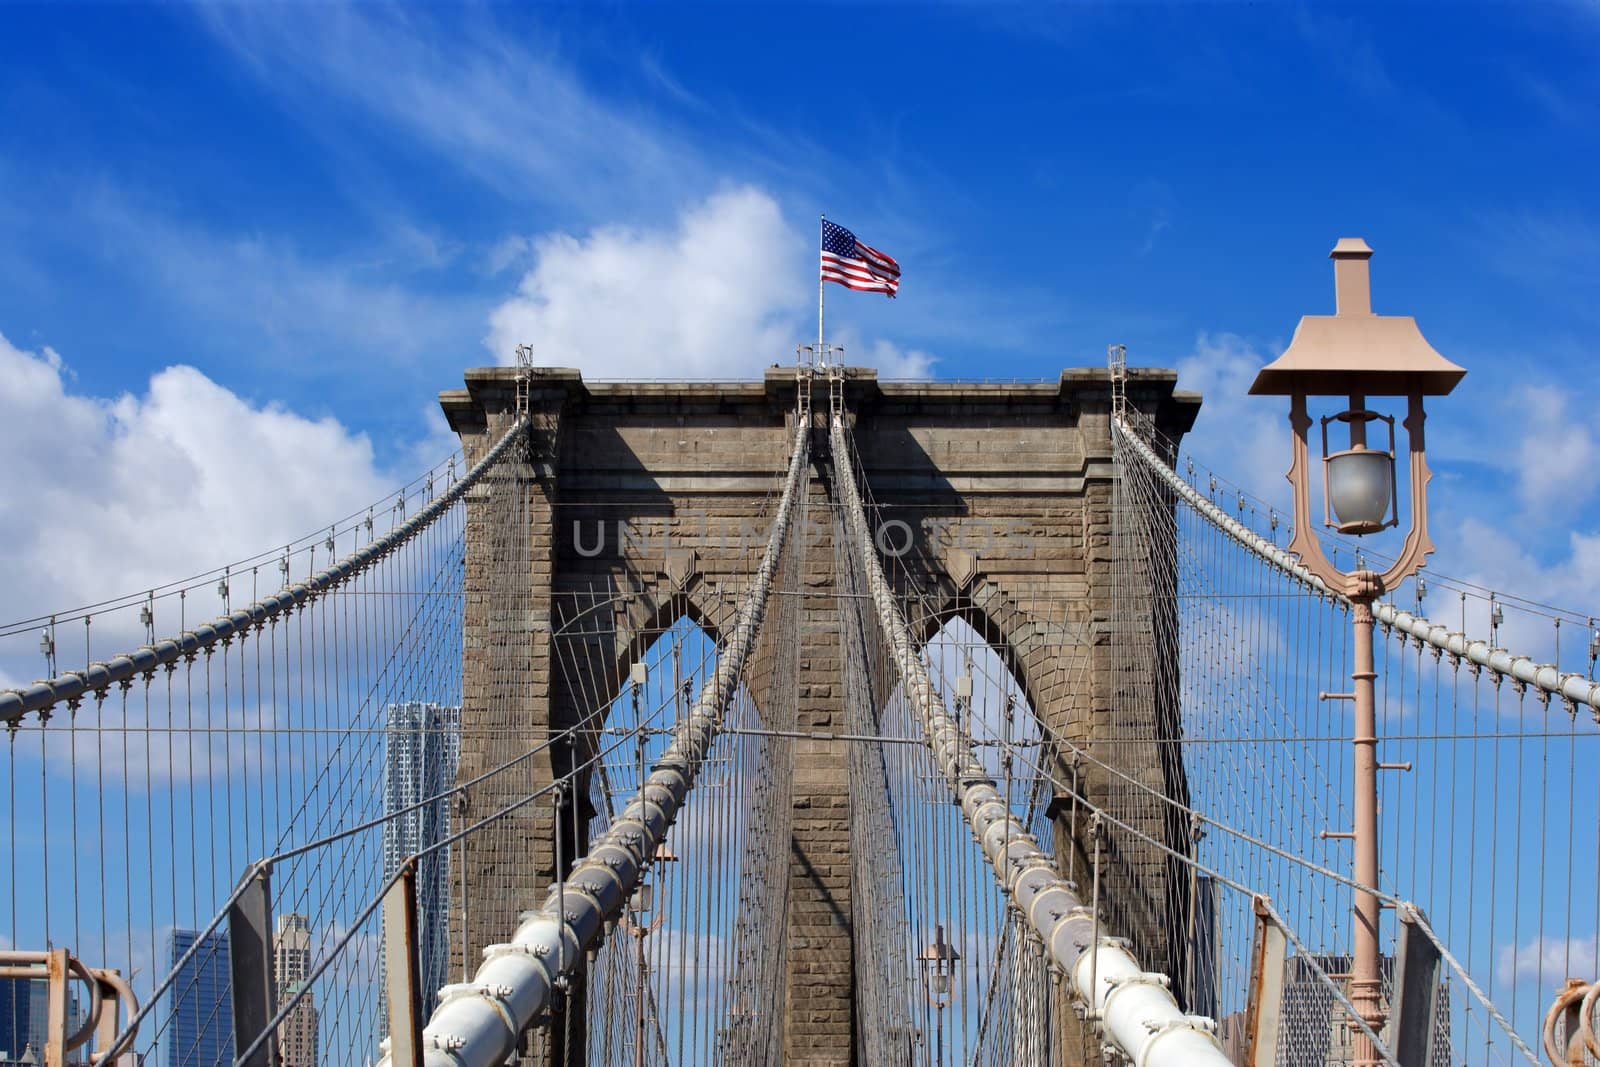 Brooklyn Bridge and American flag by sumners